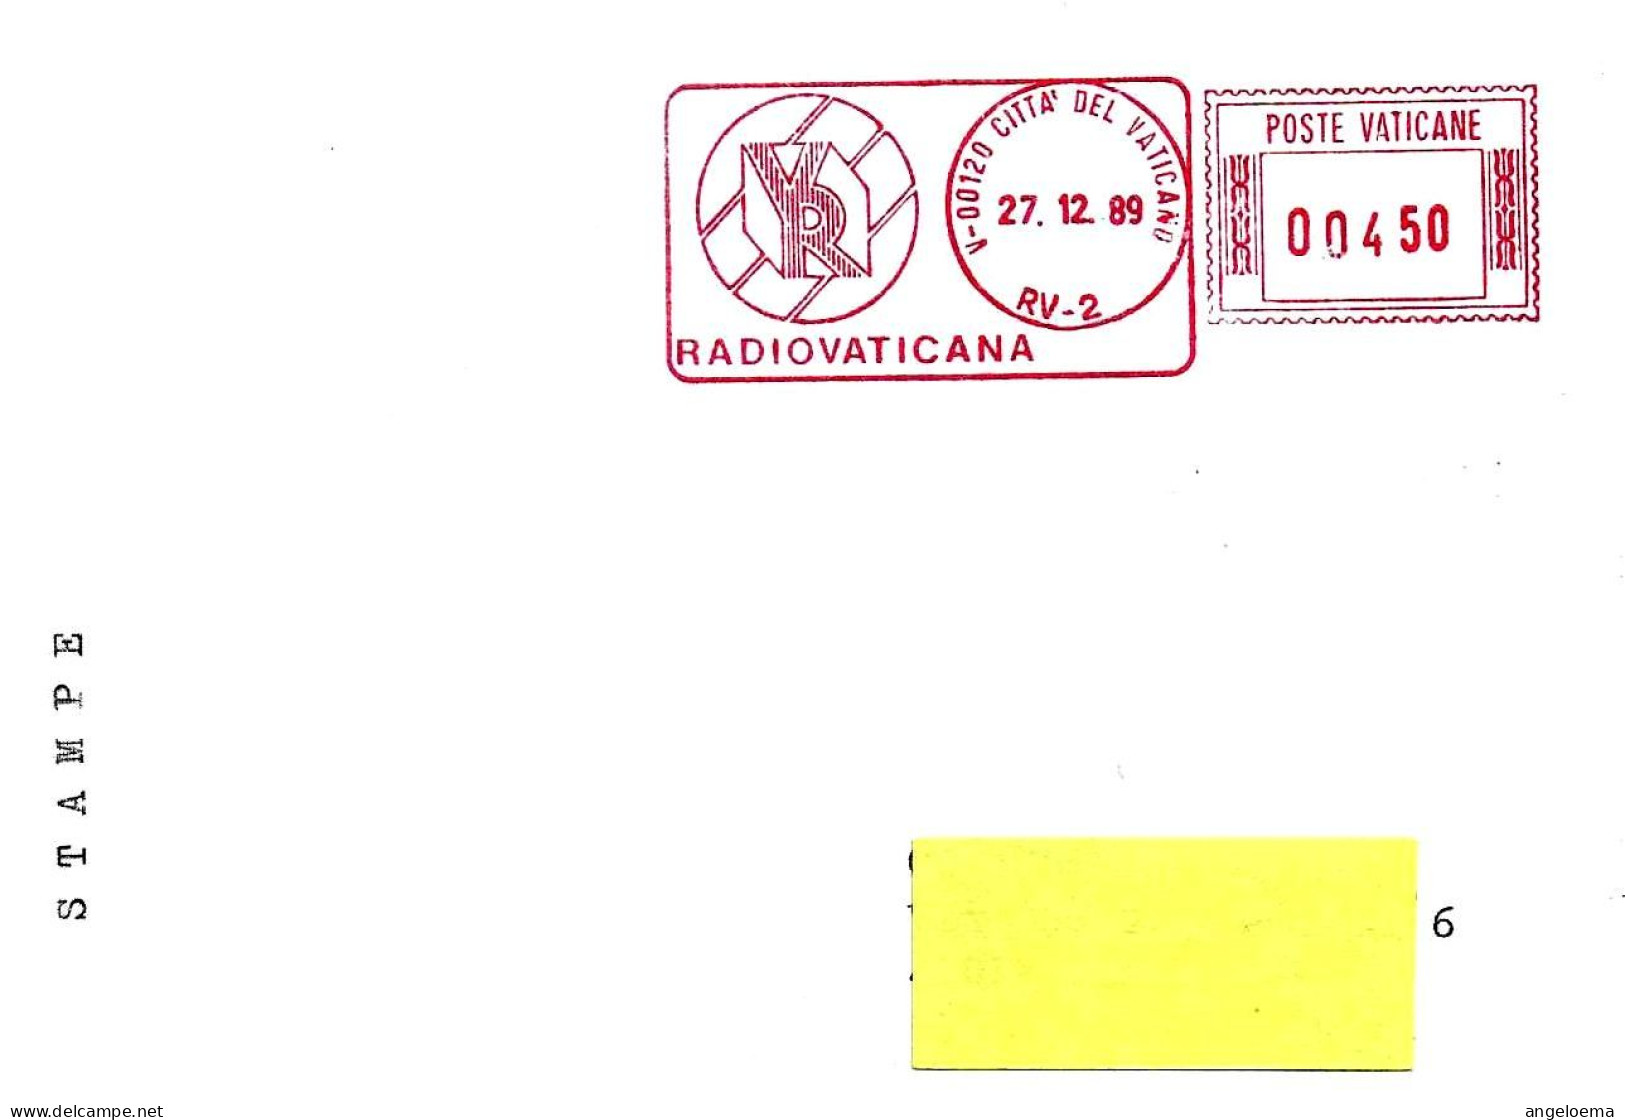 VATICANO - 1989 RADIO VATICANA RV-2 Ema Affrancatura Meccanica Rossa Red Meter Su Busta Viaggiata - 11274 - Franking Machines (EMA)